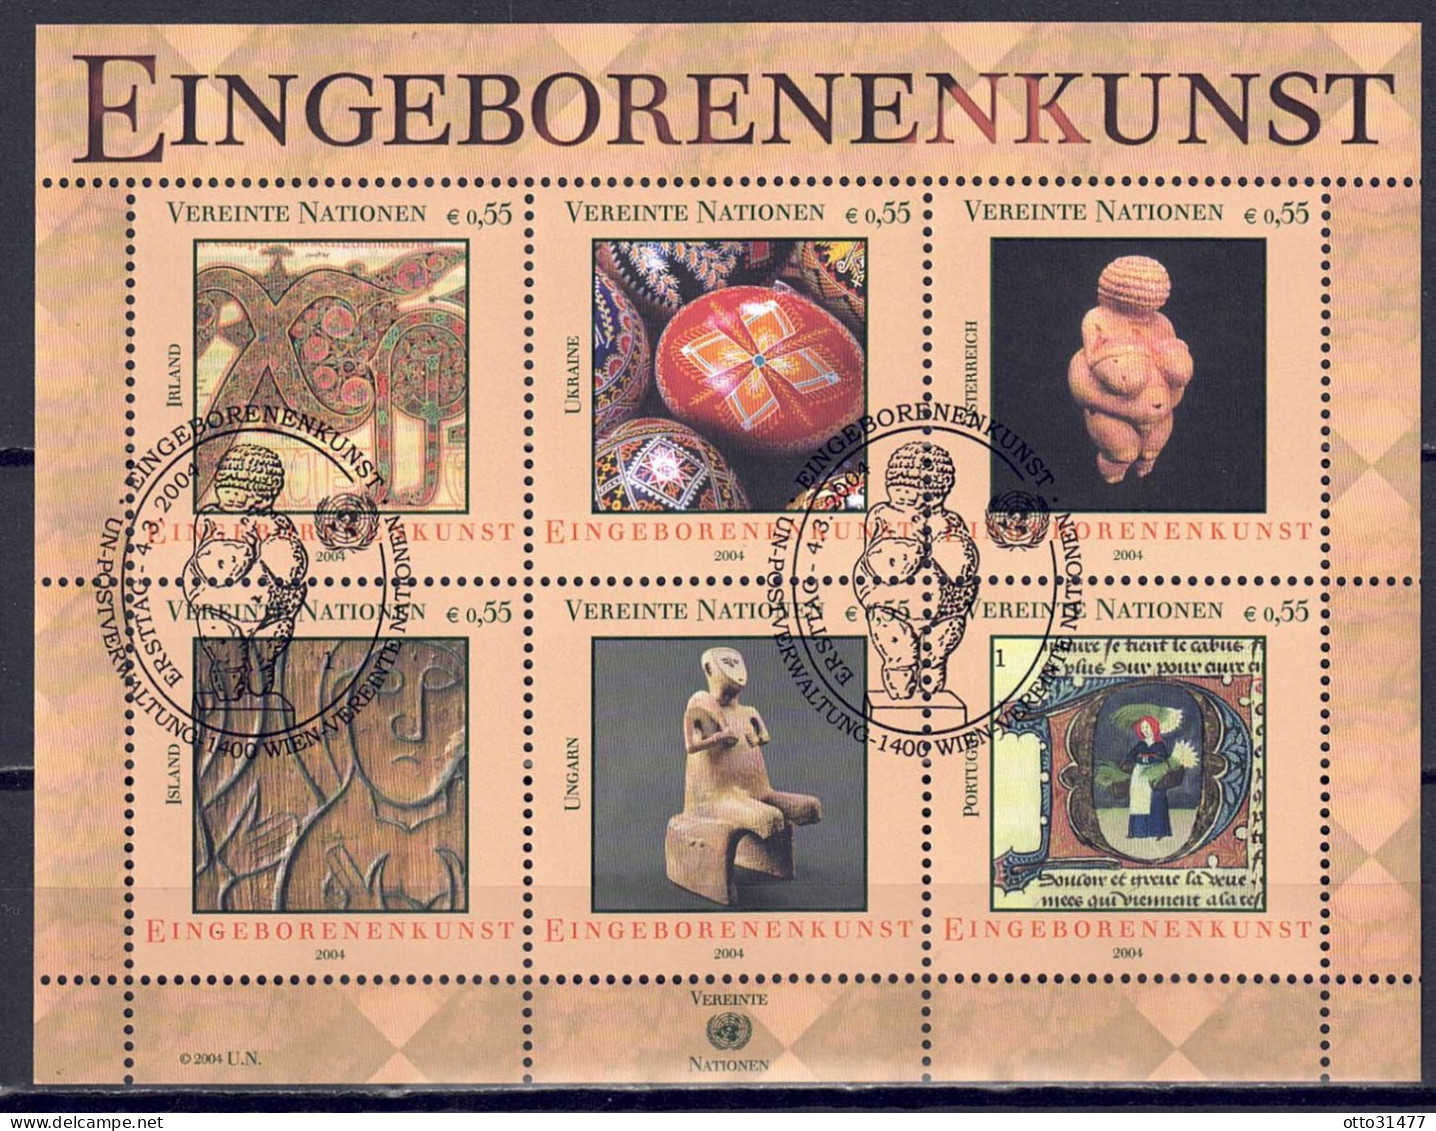 UNO Wien 2004 - Eingeborenenkunst (II), Block 18, Gestempelt / Used - Oblitérés